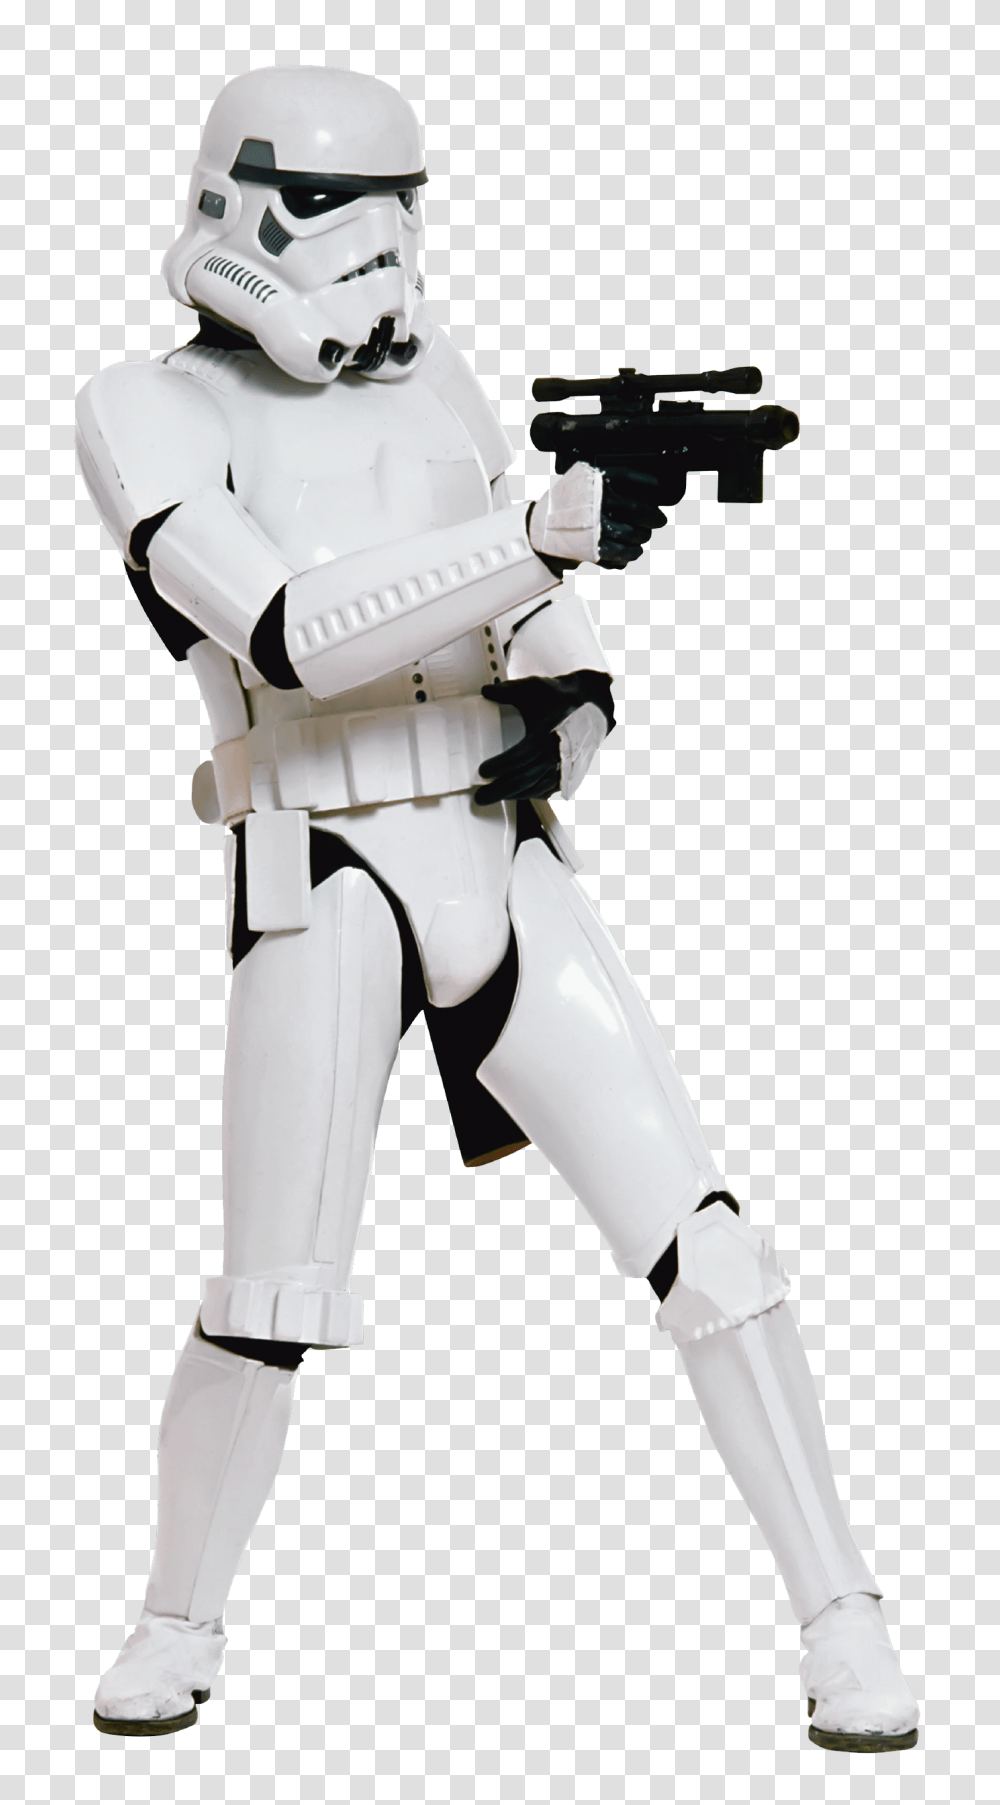 Download Hd Stormtrooper Starship Trooper Star Wars Starship Troopers Star Wars, Robot, Helmet, Clothing, Apparel Transparent Png